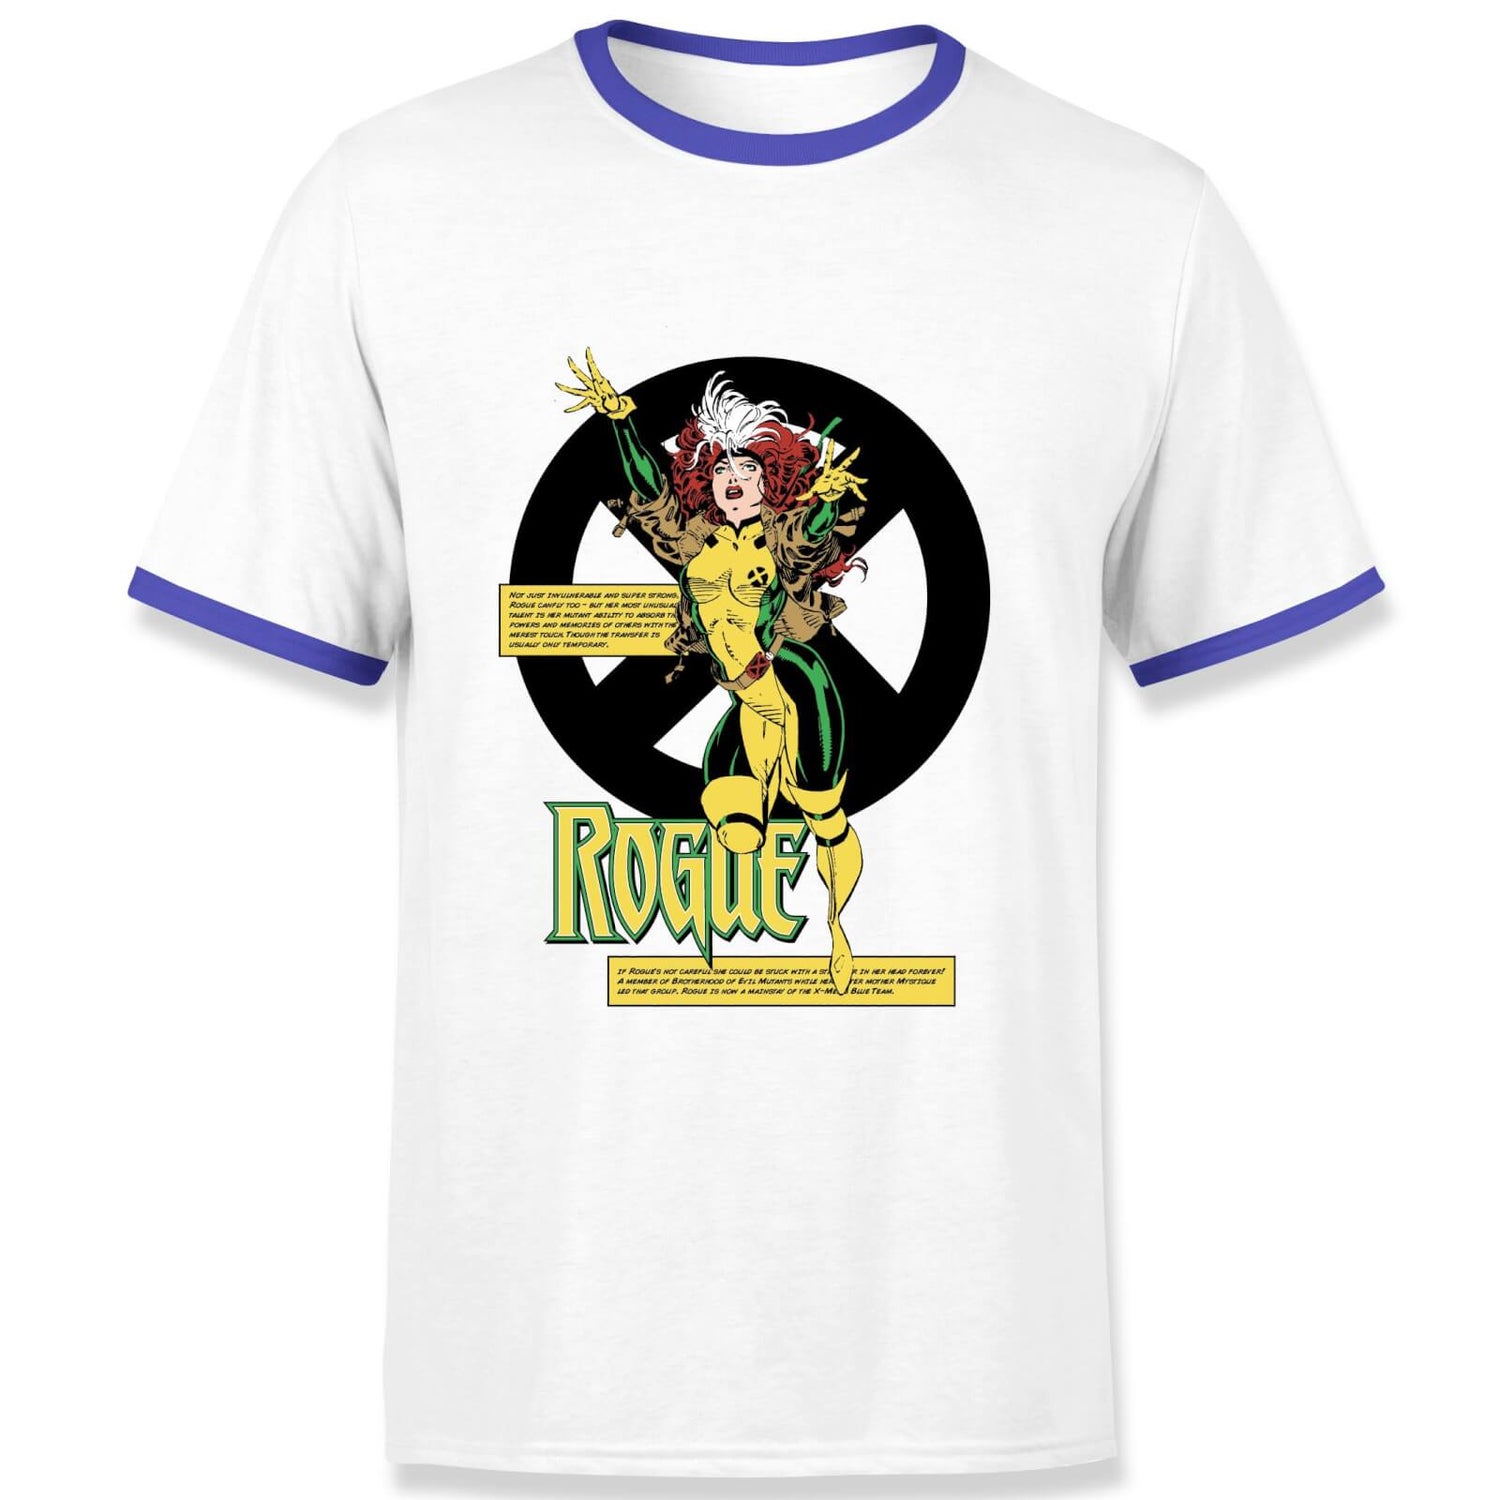 X-Men Rogue Bio Men's Ringer T-Shirt - White/Navy